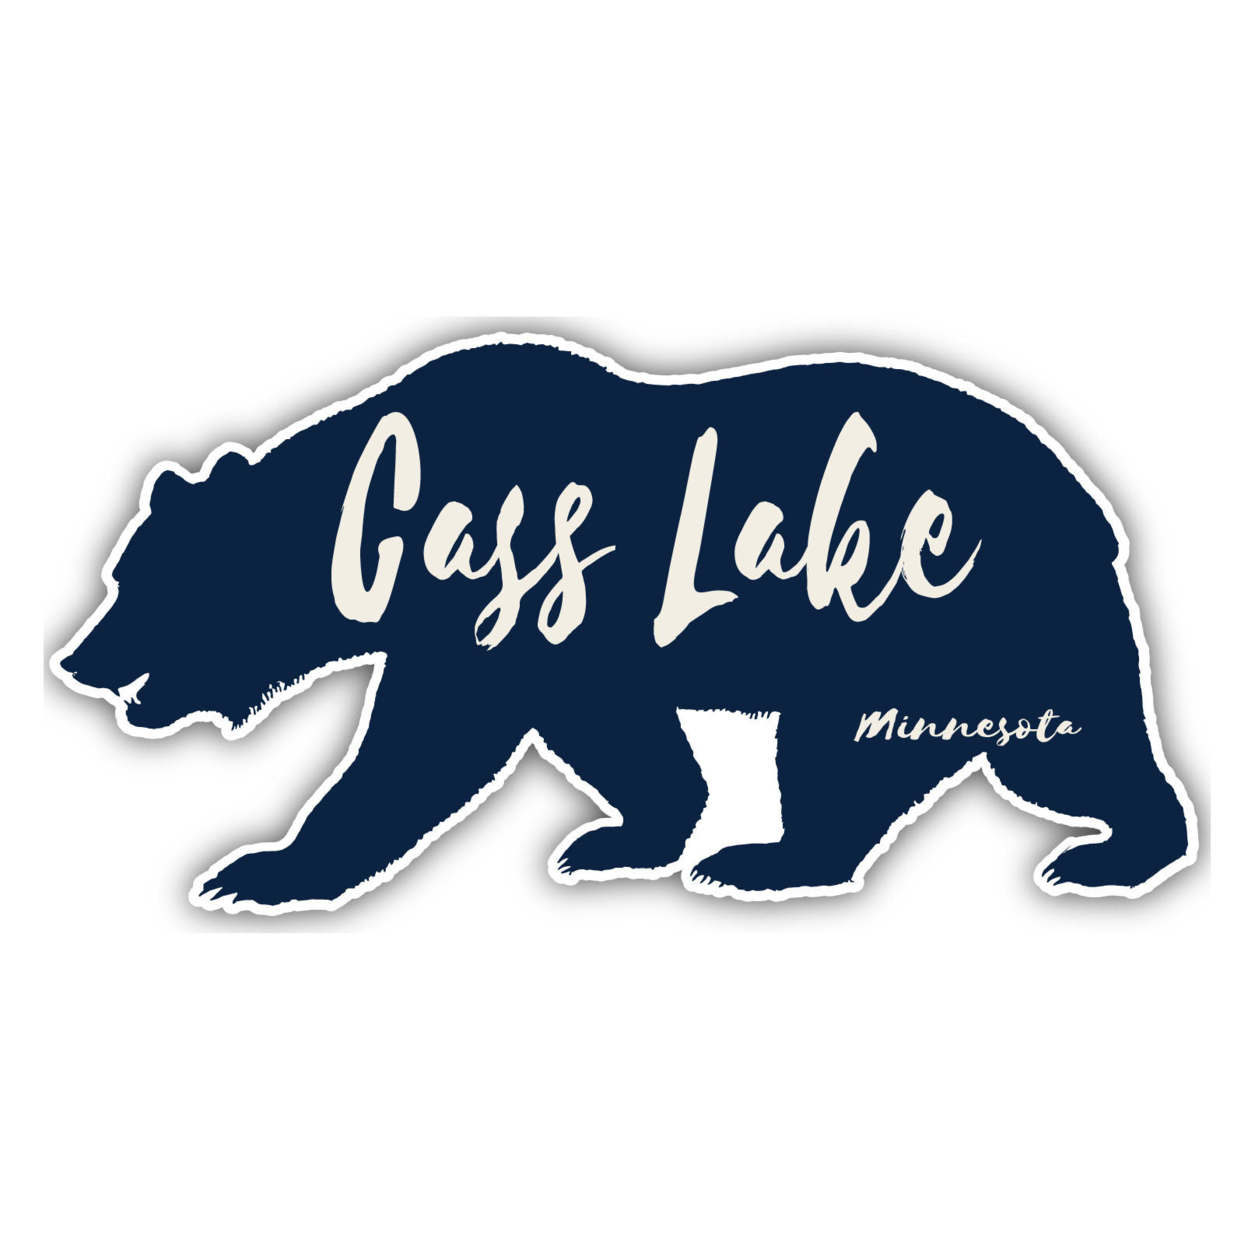 Cass Lake Minnesota Souvenir Decorative Stickers (Choose Theme And Size) - Single Unit, 2-Inch, Bear